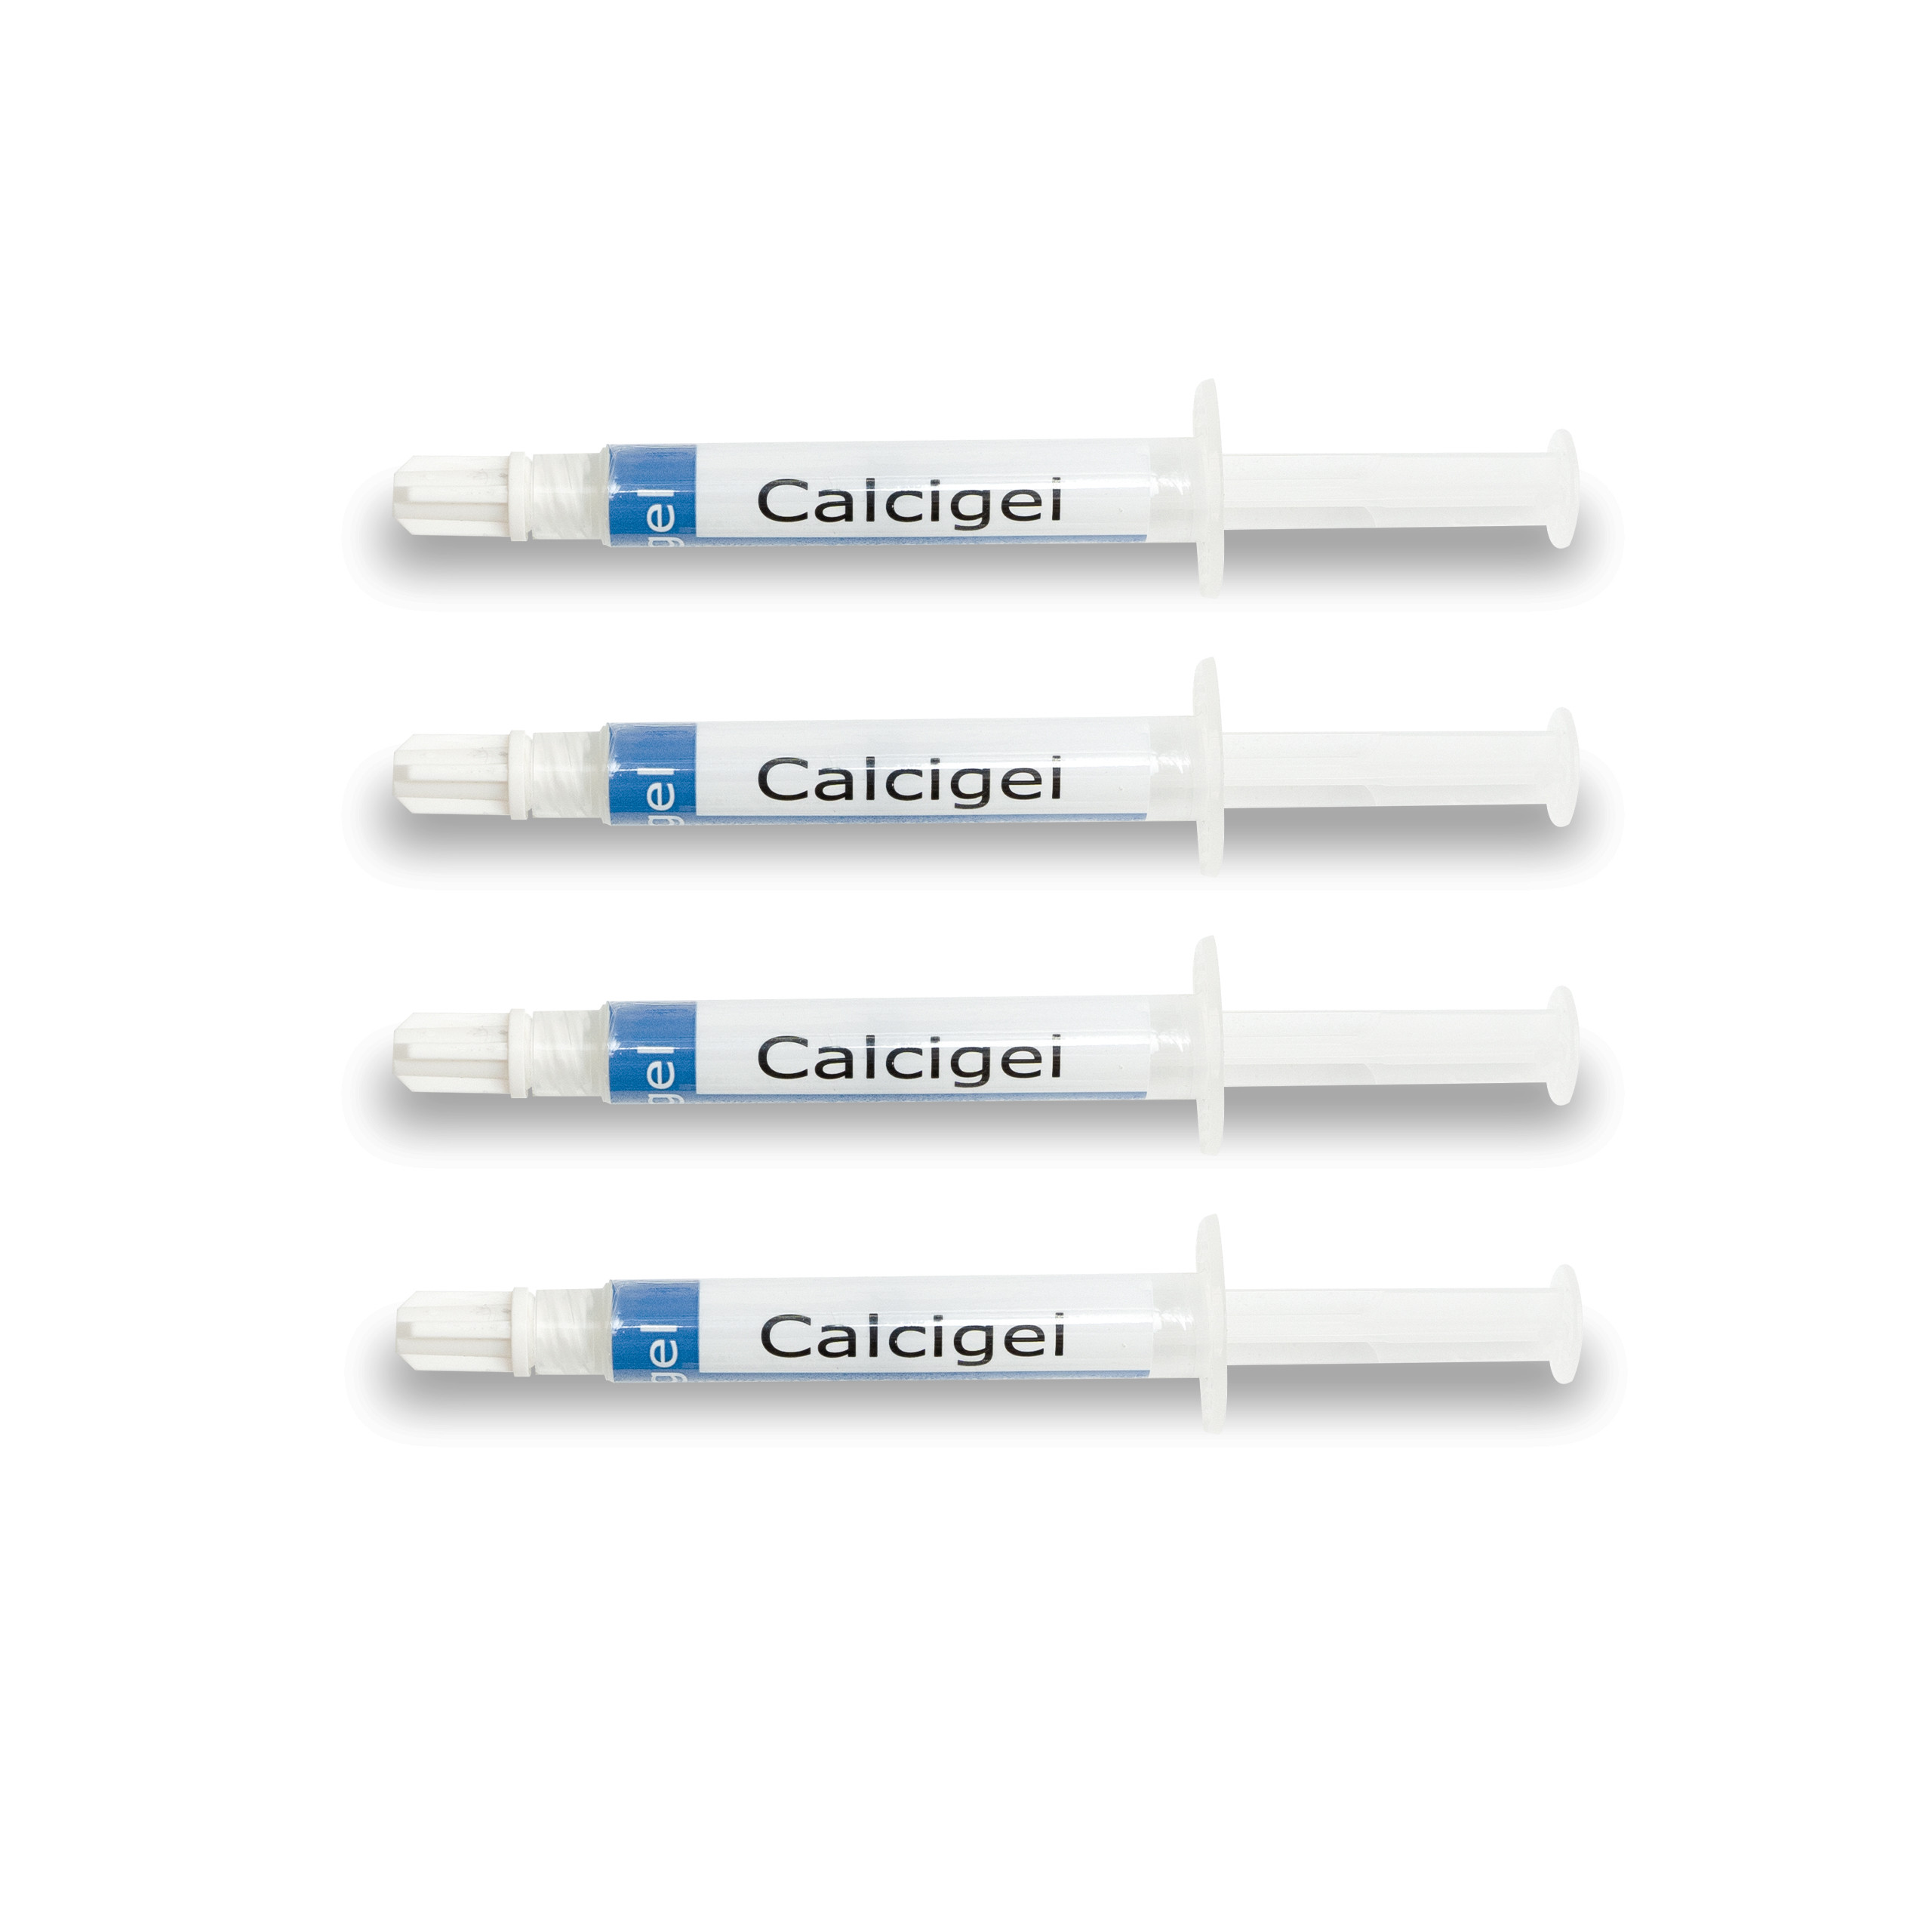 Prevest Denpro Calcigel Calcium Hydroxide Paste